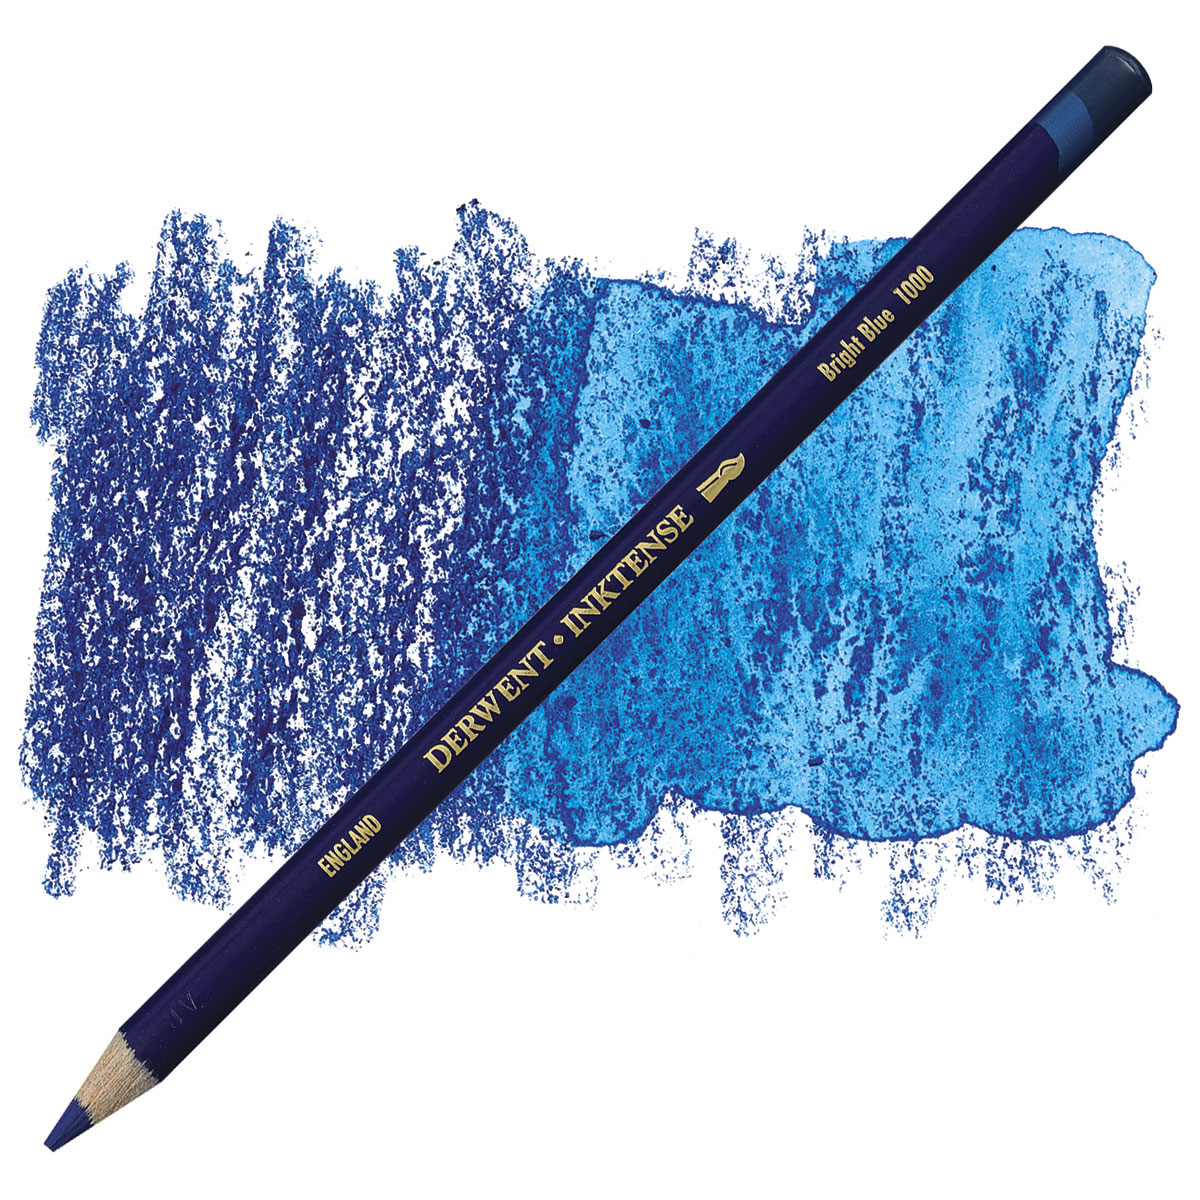 Derwent Inktense Pencils at New River Art & Fiber